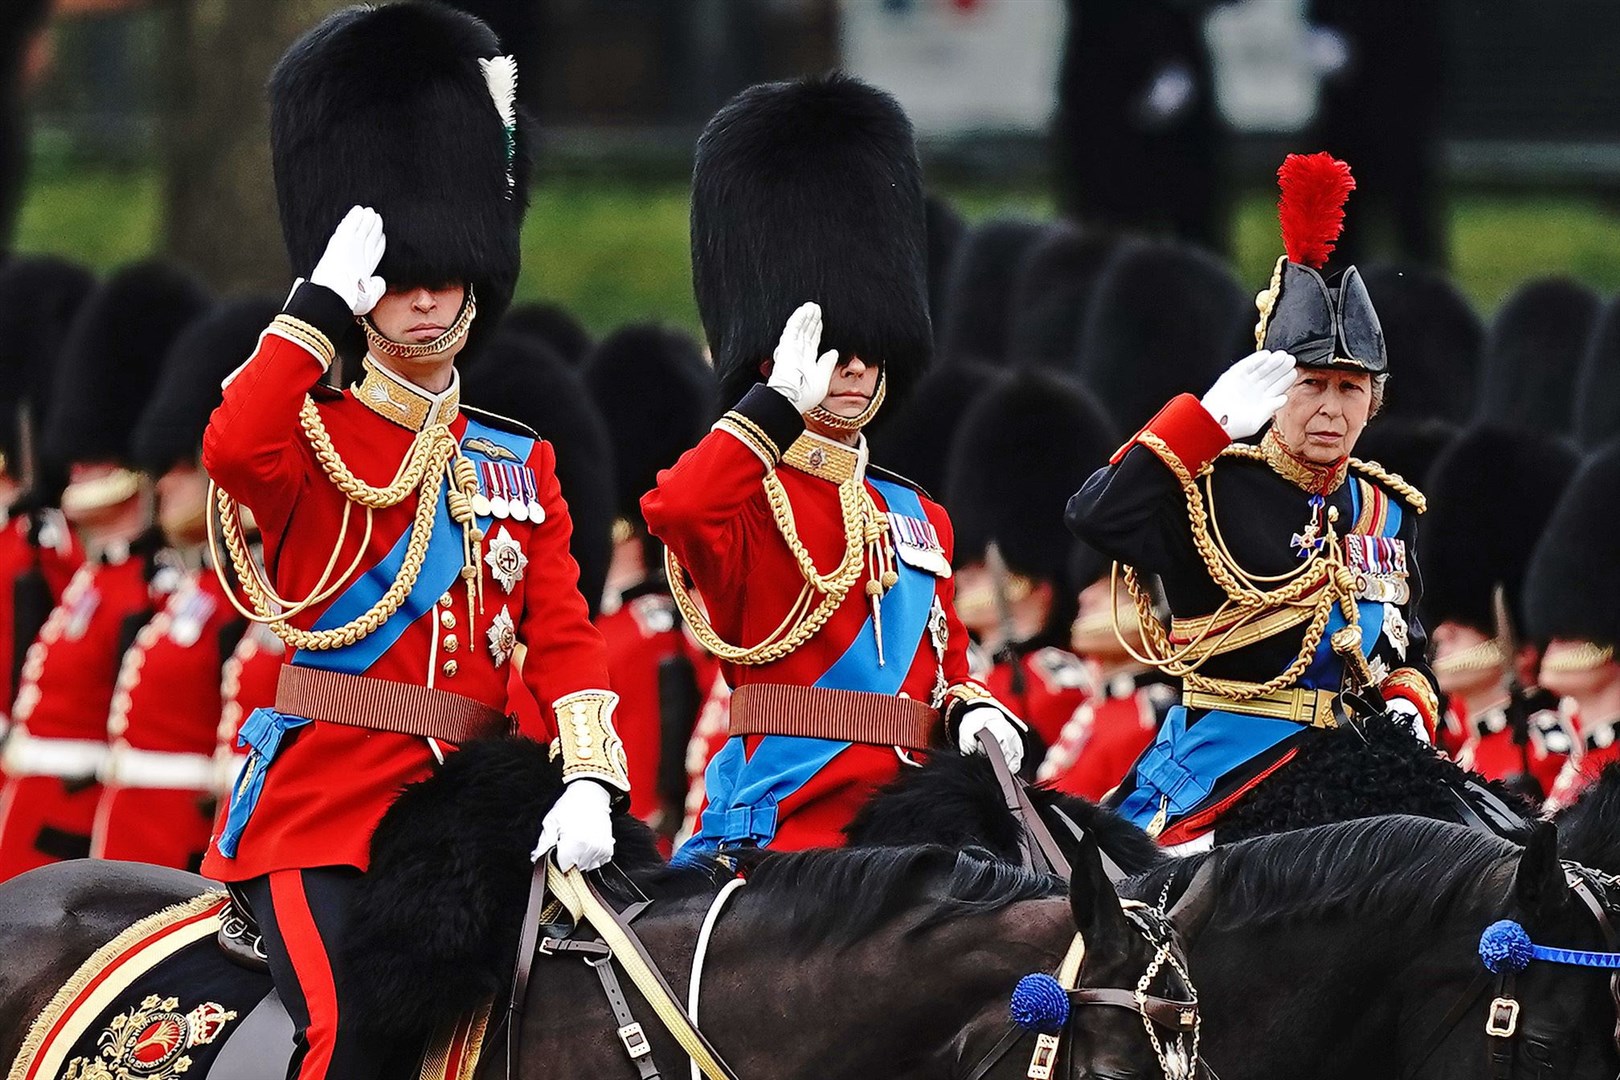 The Prince of Wales, the Duke of Edinburgh and the Princess Royal salute (Aaron Chown/PA)